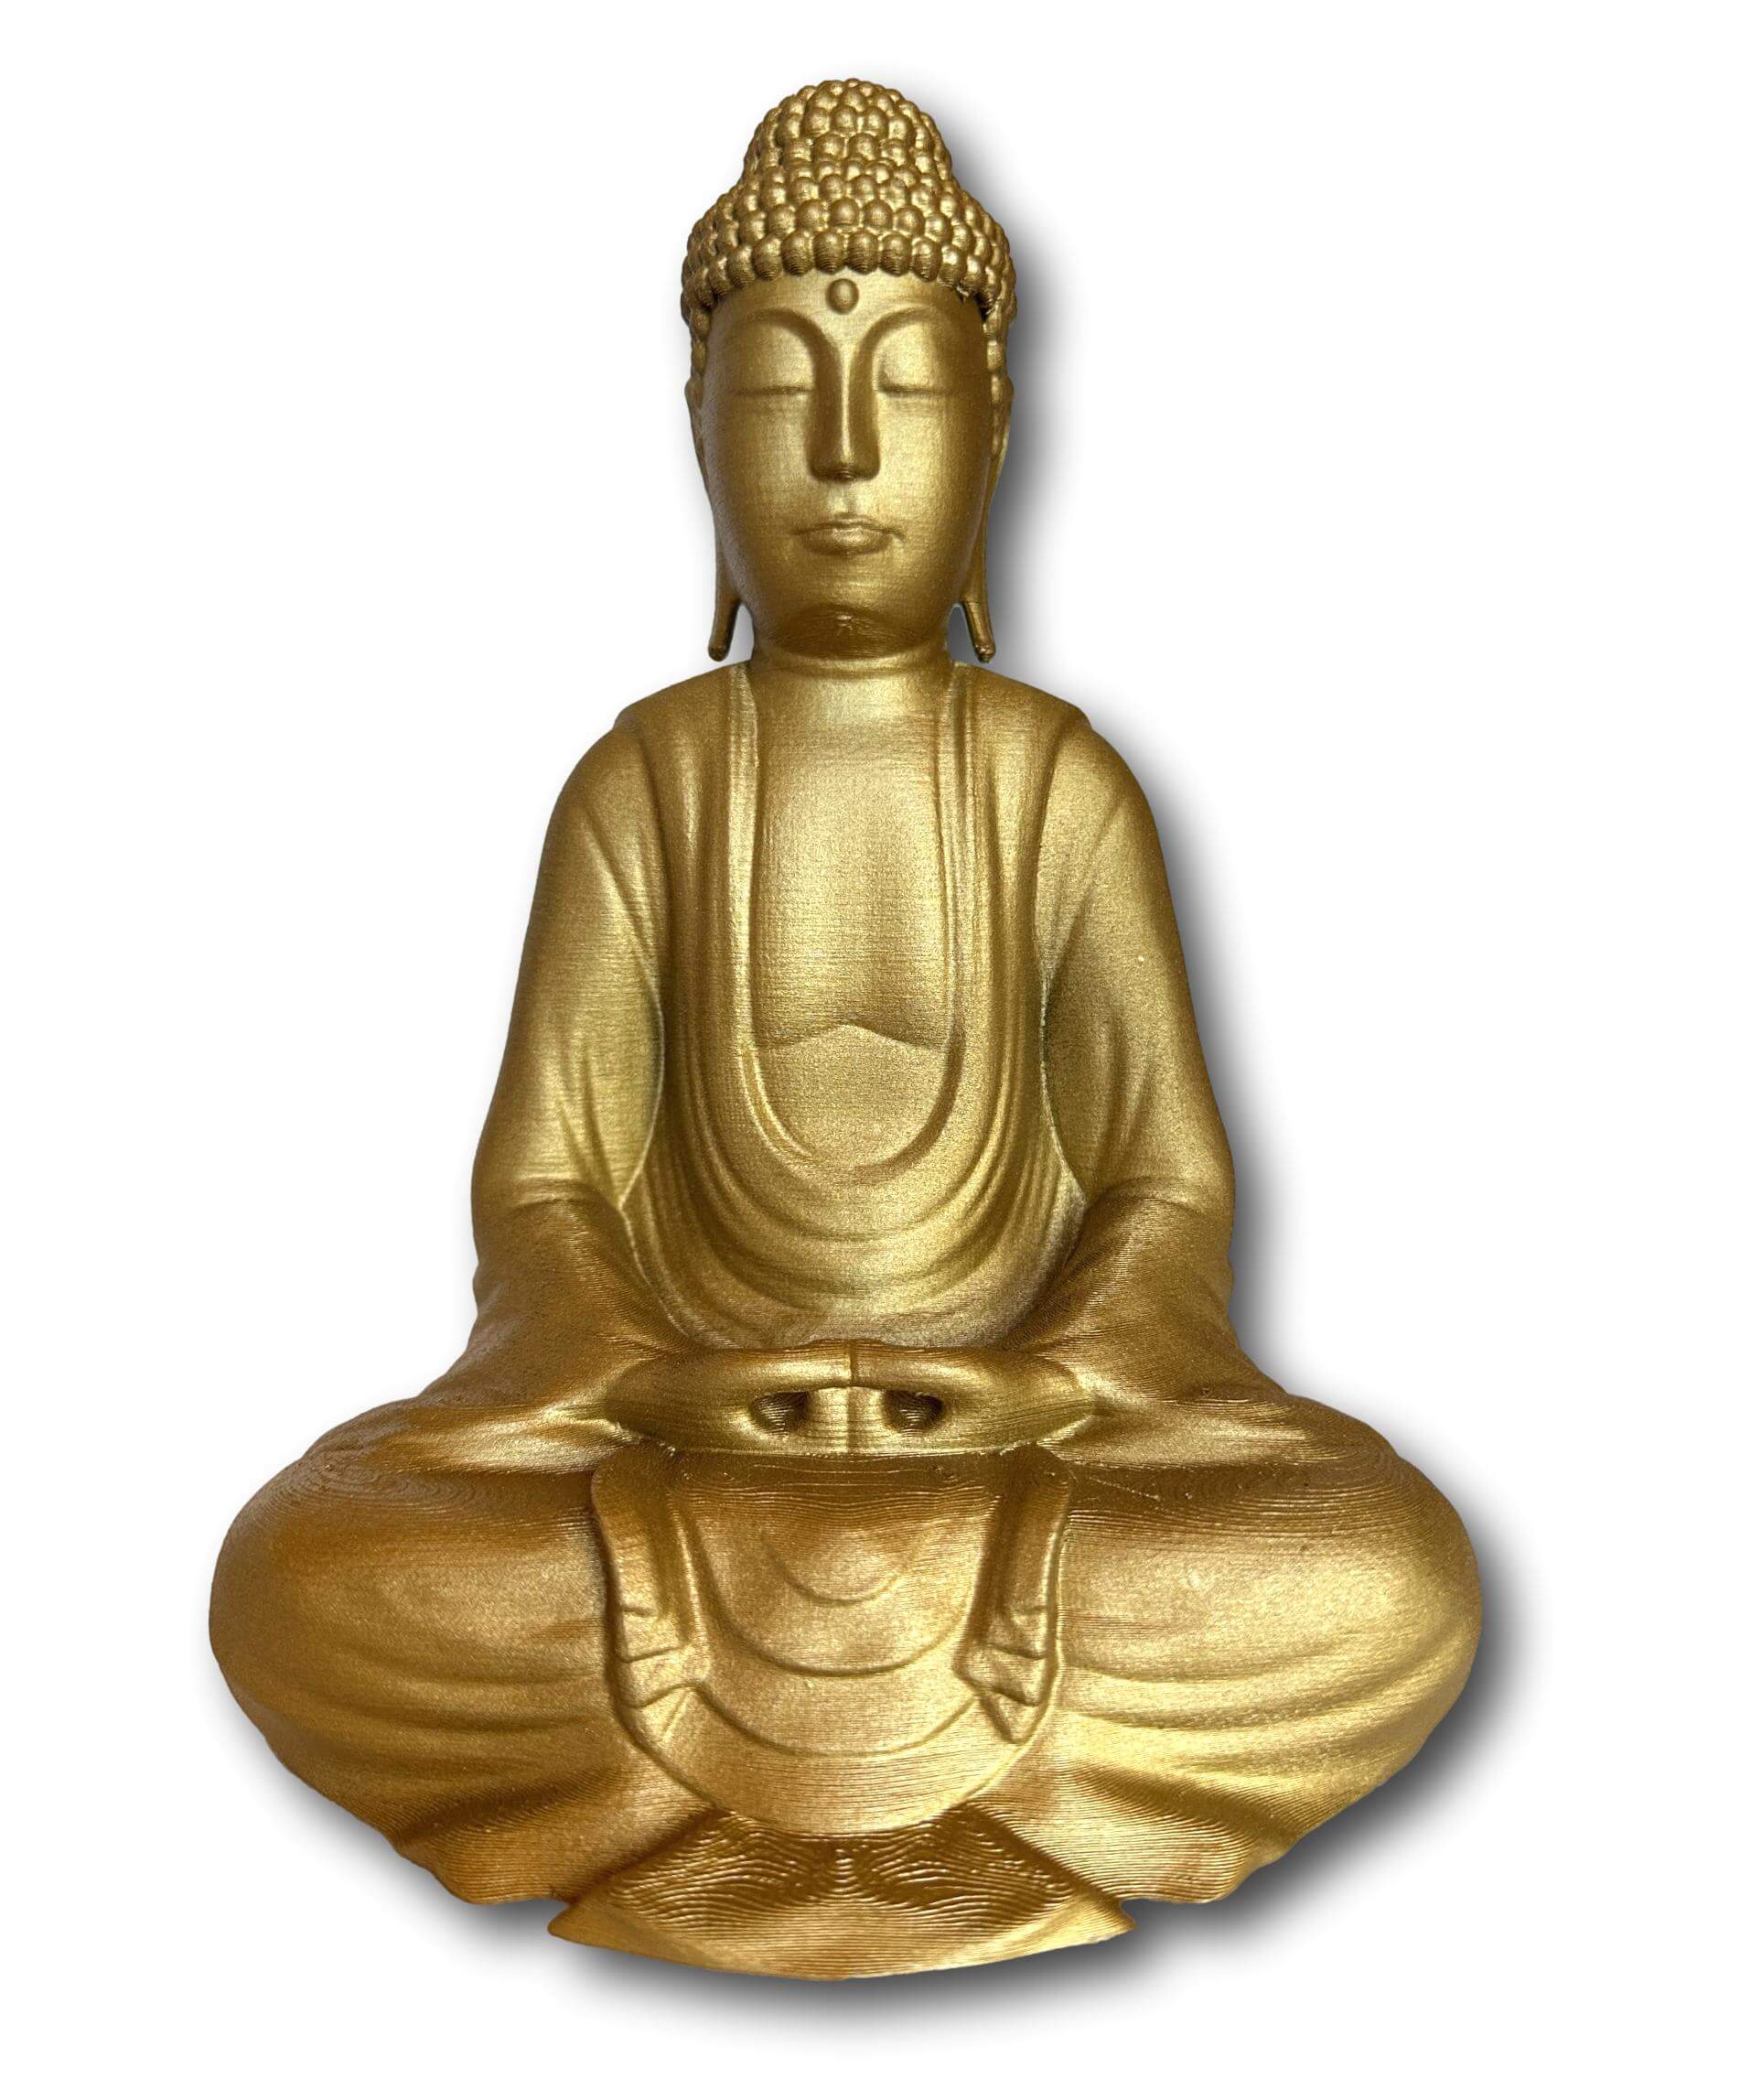 Gold Buddha Statue - Ubud Bali Buddha Handmade - In Island